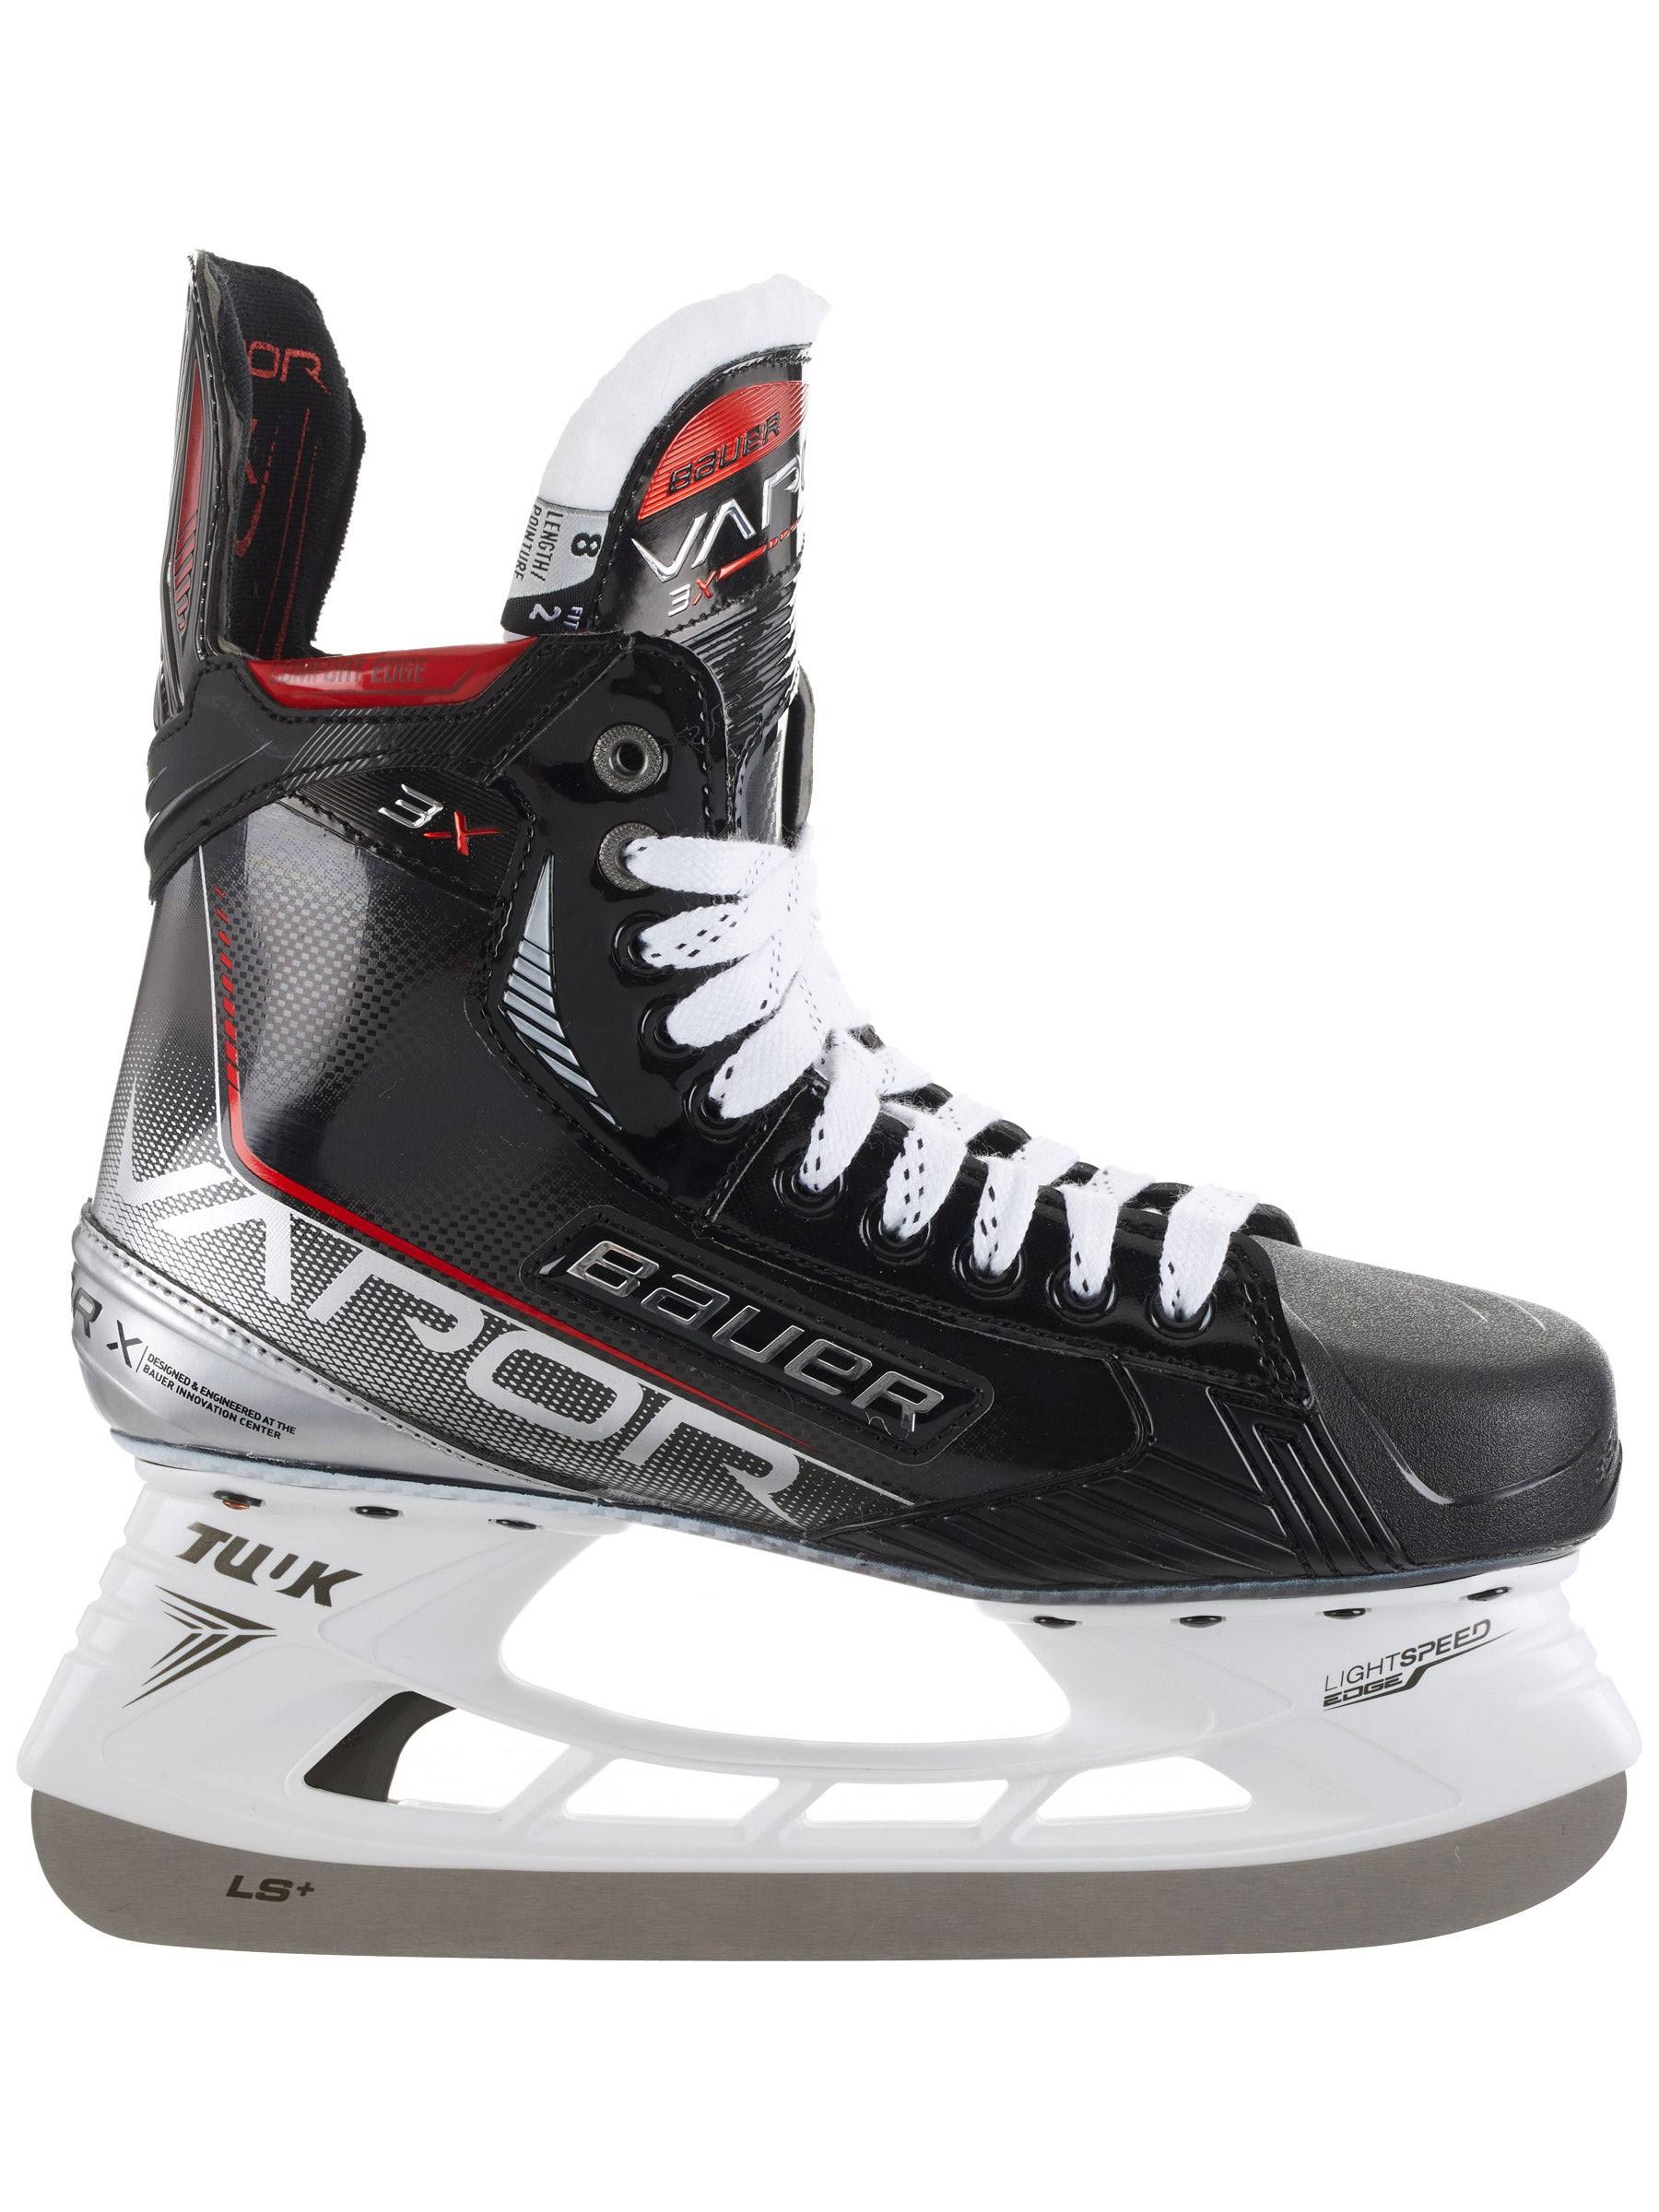 Bauer Vapor 3X Senior Ice Hockey Skates - 8.0 - Fit 3